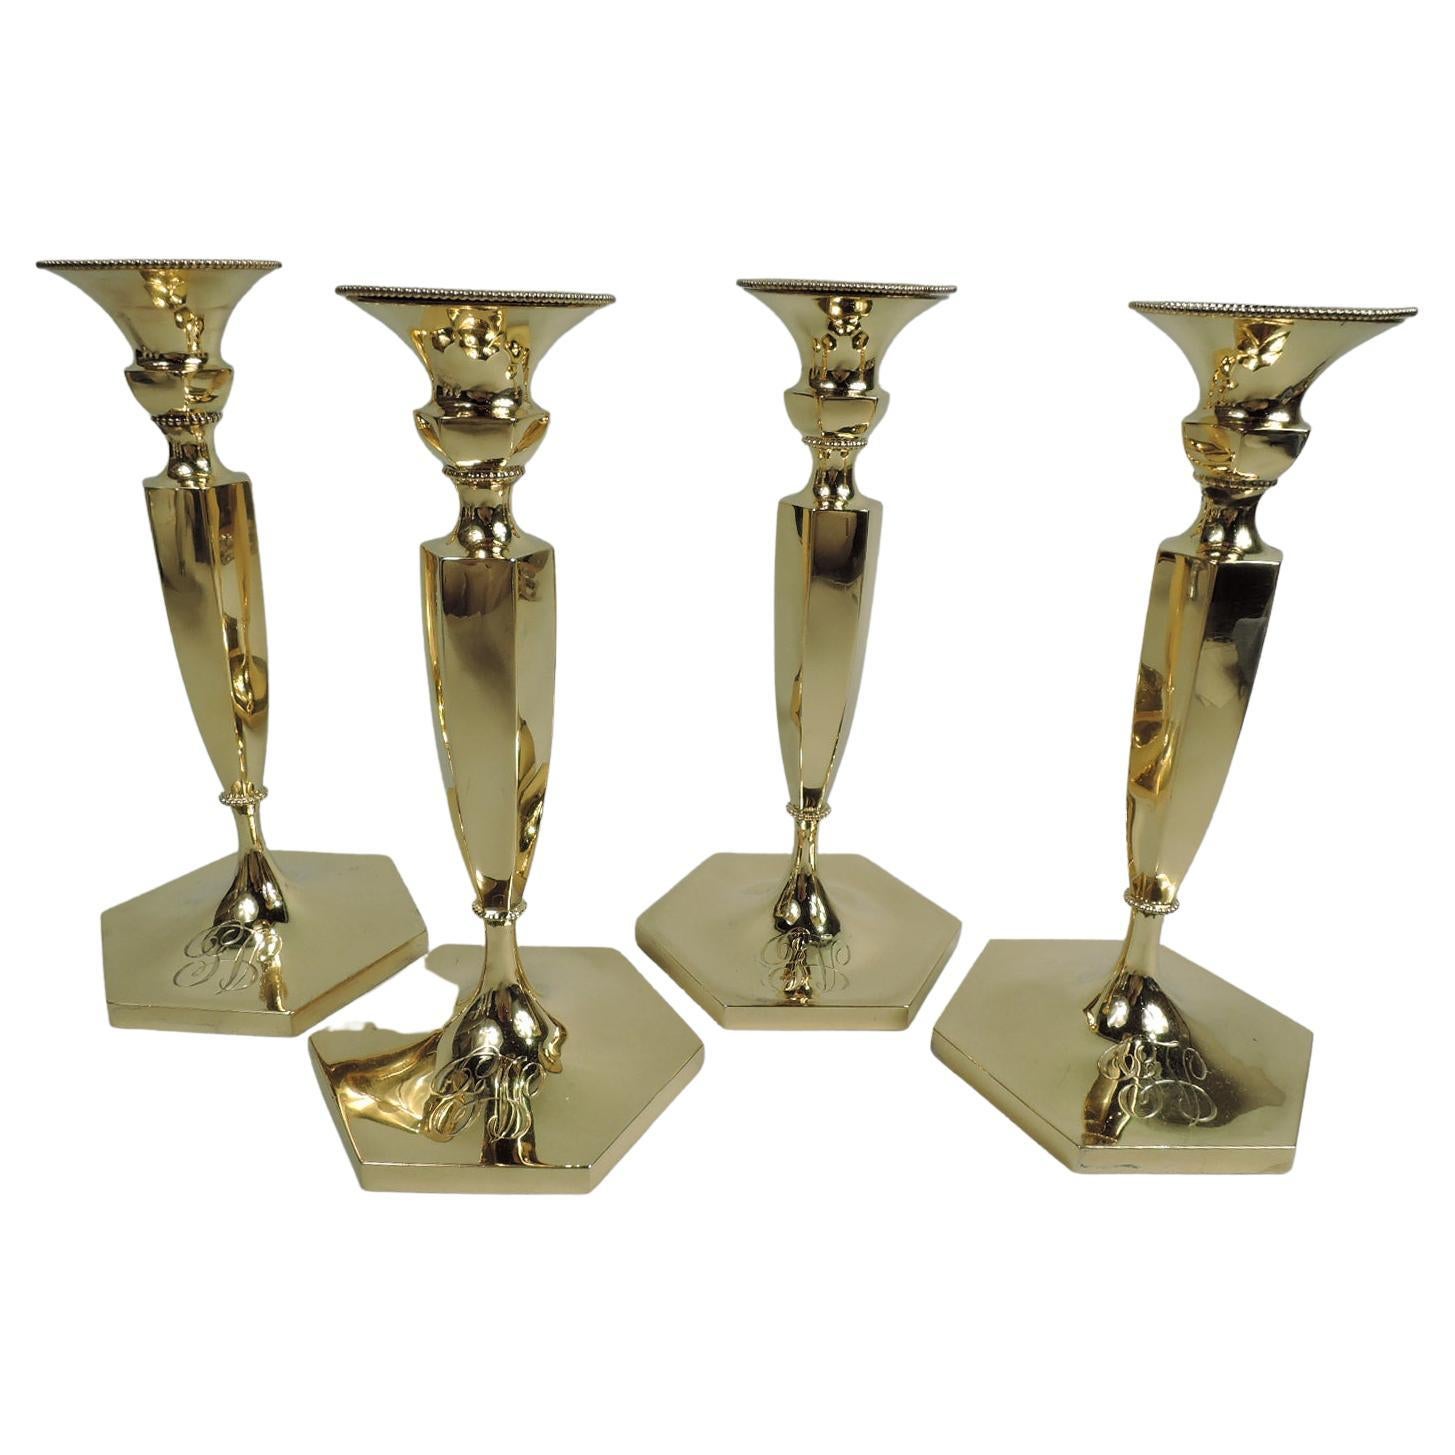 Set of 4 Antique Gilt Sterling Silver Candlesticks by New York Maker